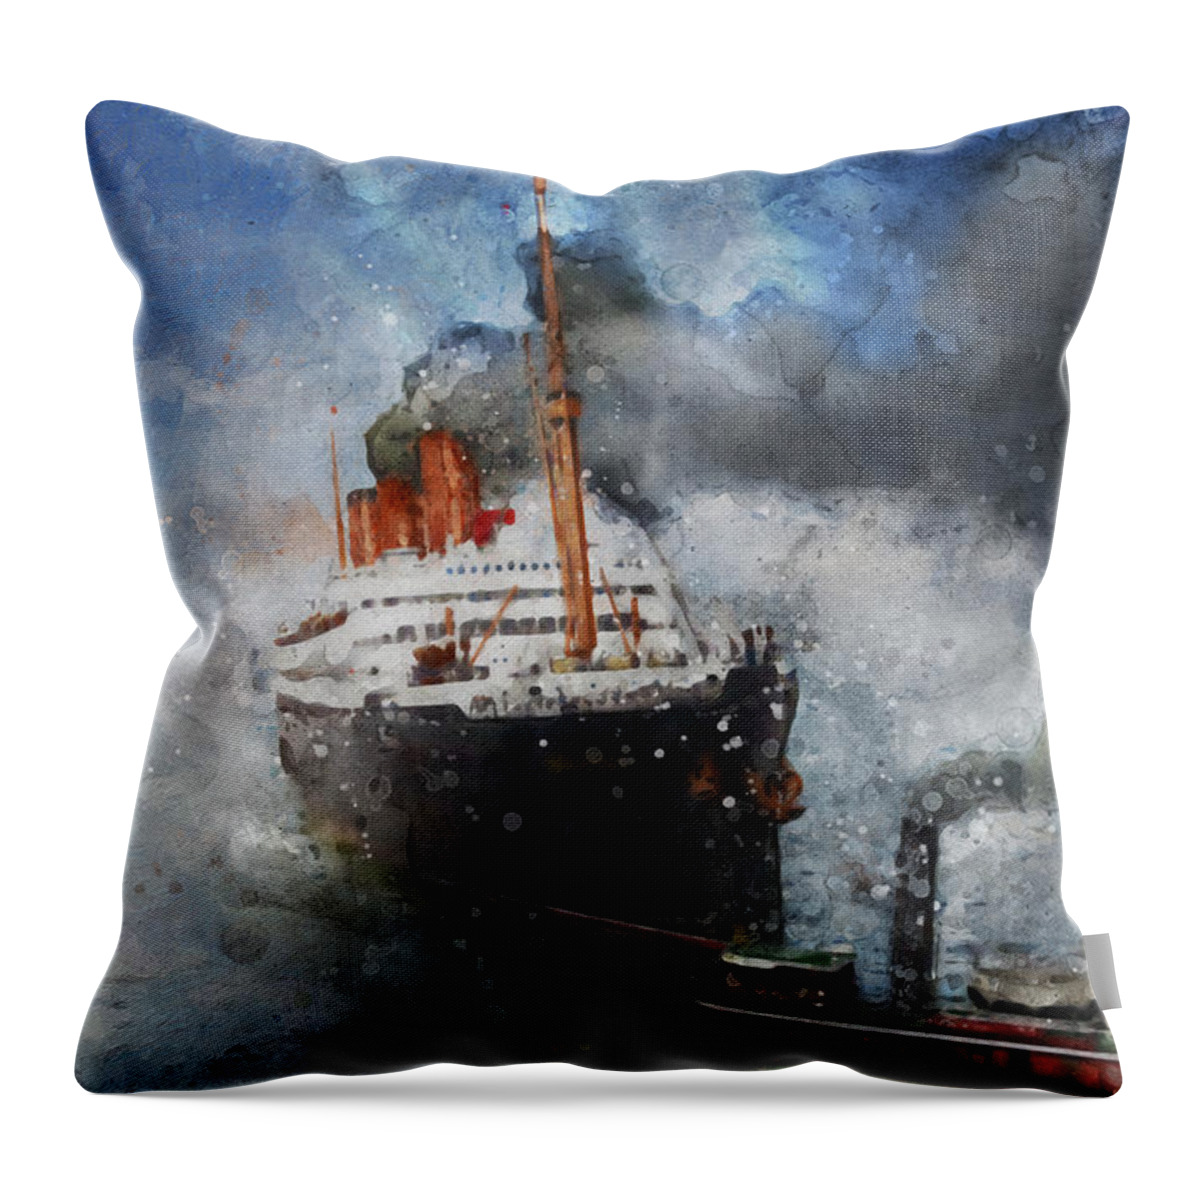 Steamer Throw Pillow featuring the digital art R.M.S. Berengaria by Geir Rosset